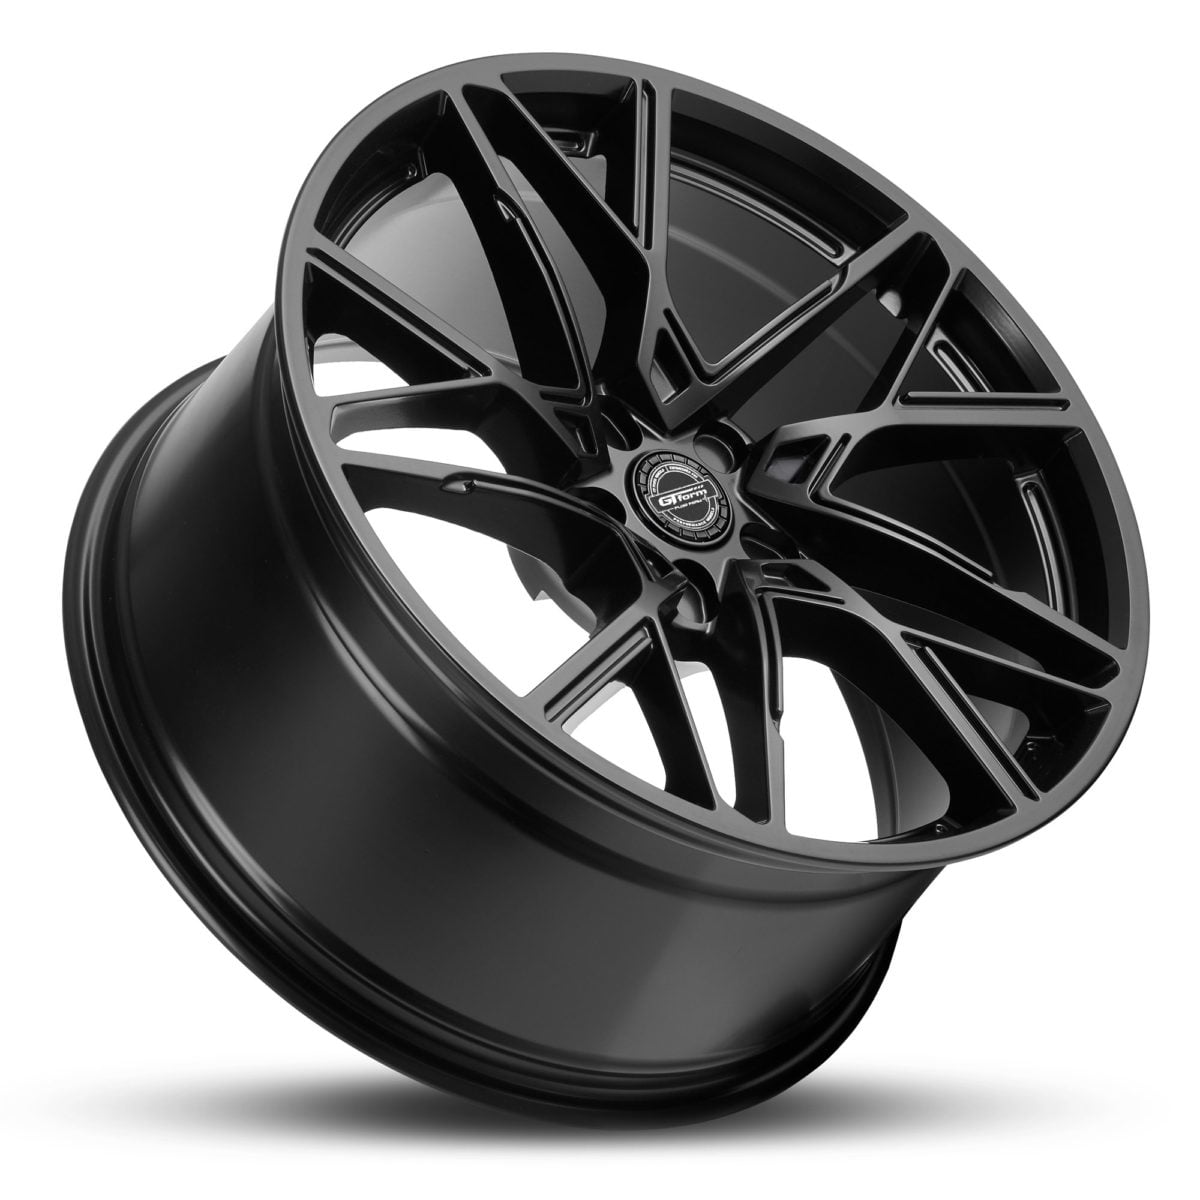 GT Form Interflow satin black wheels performance rims